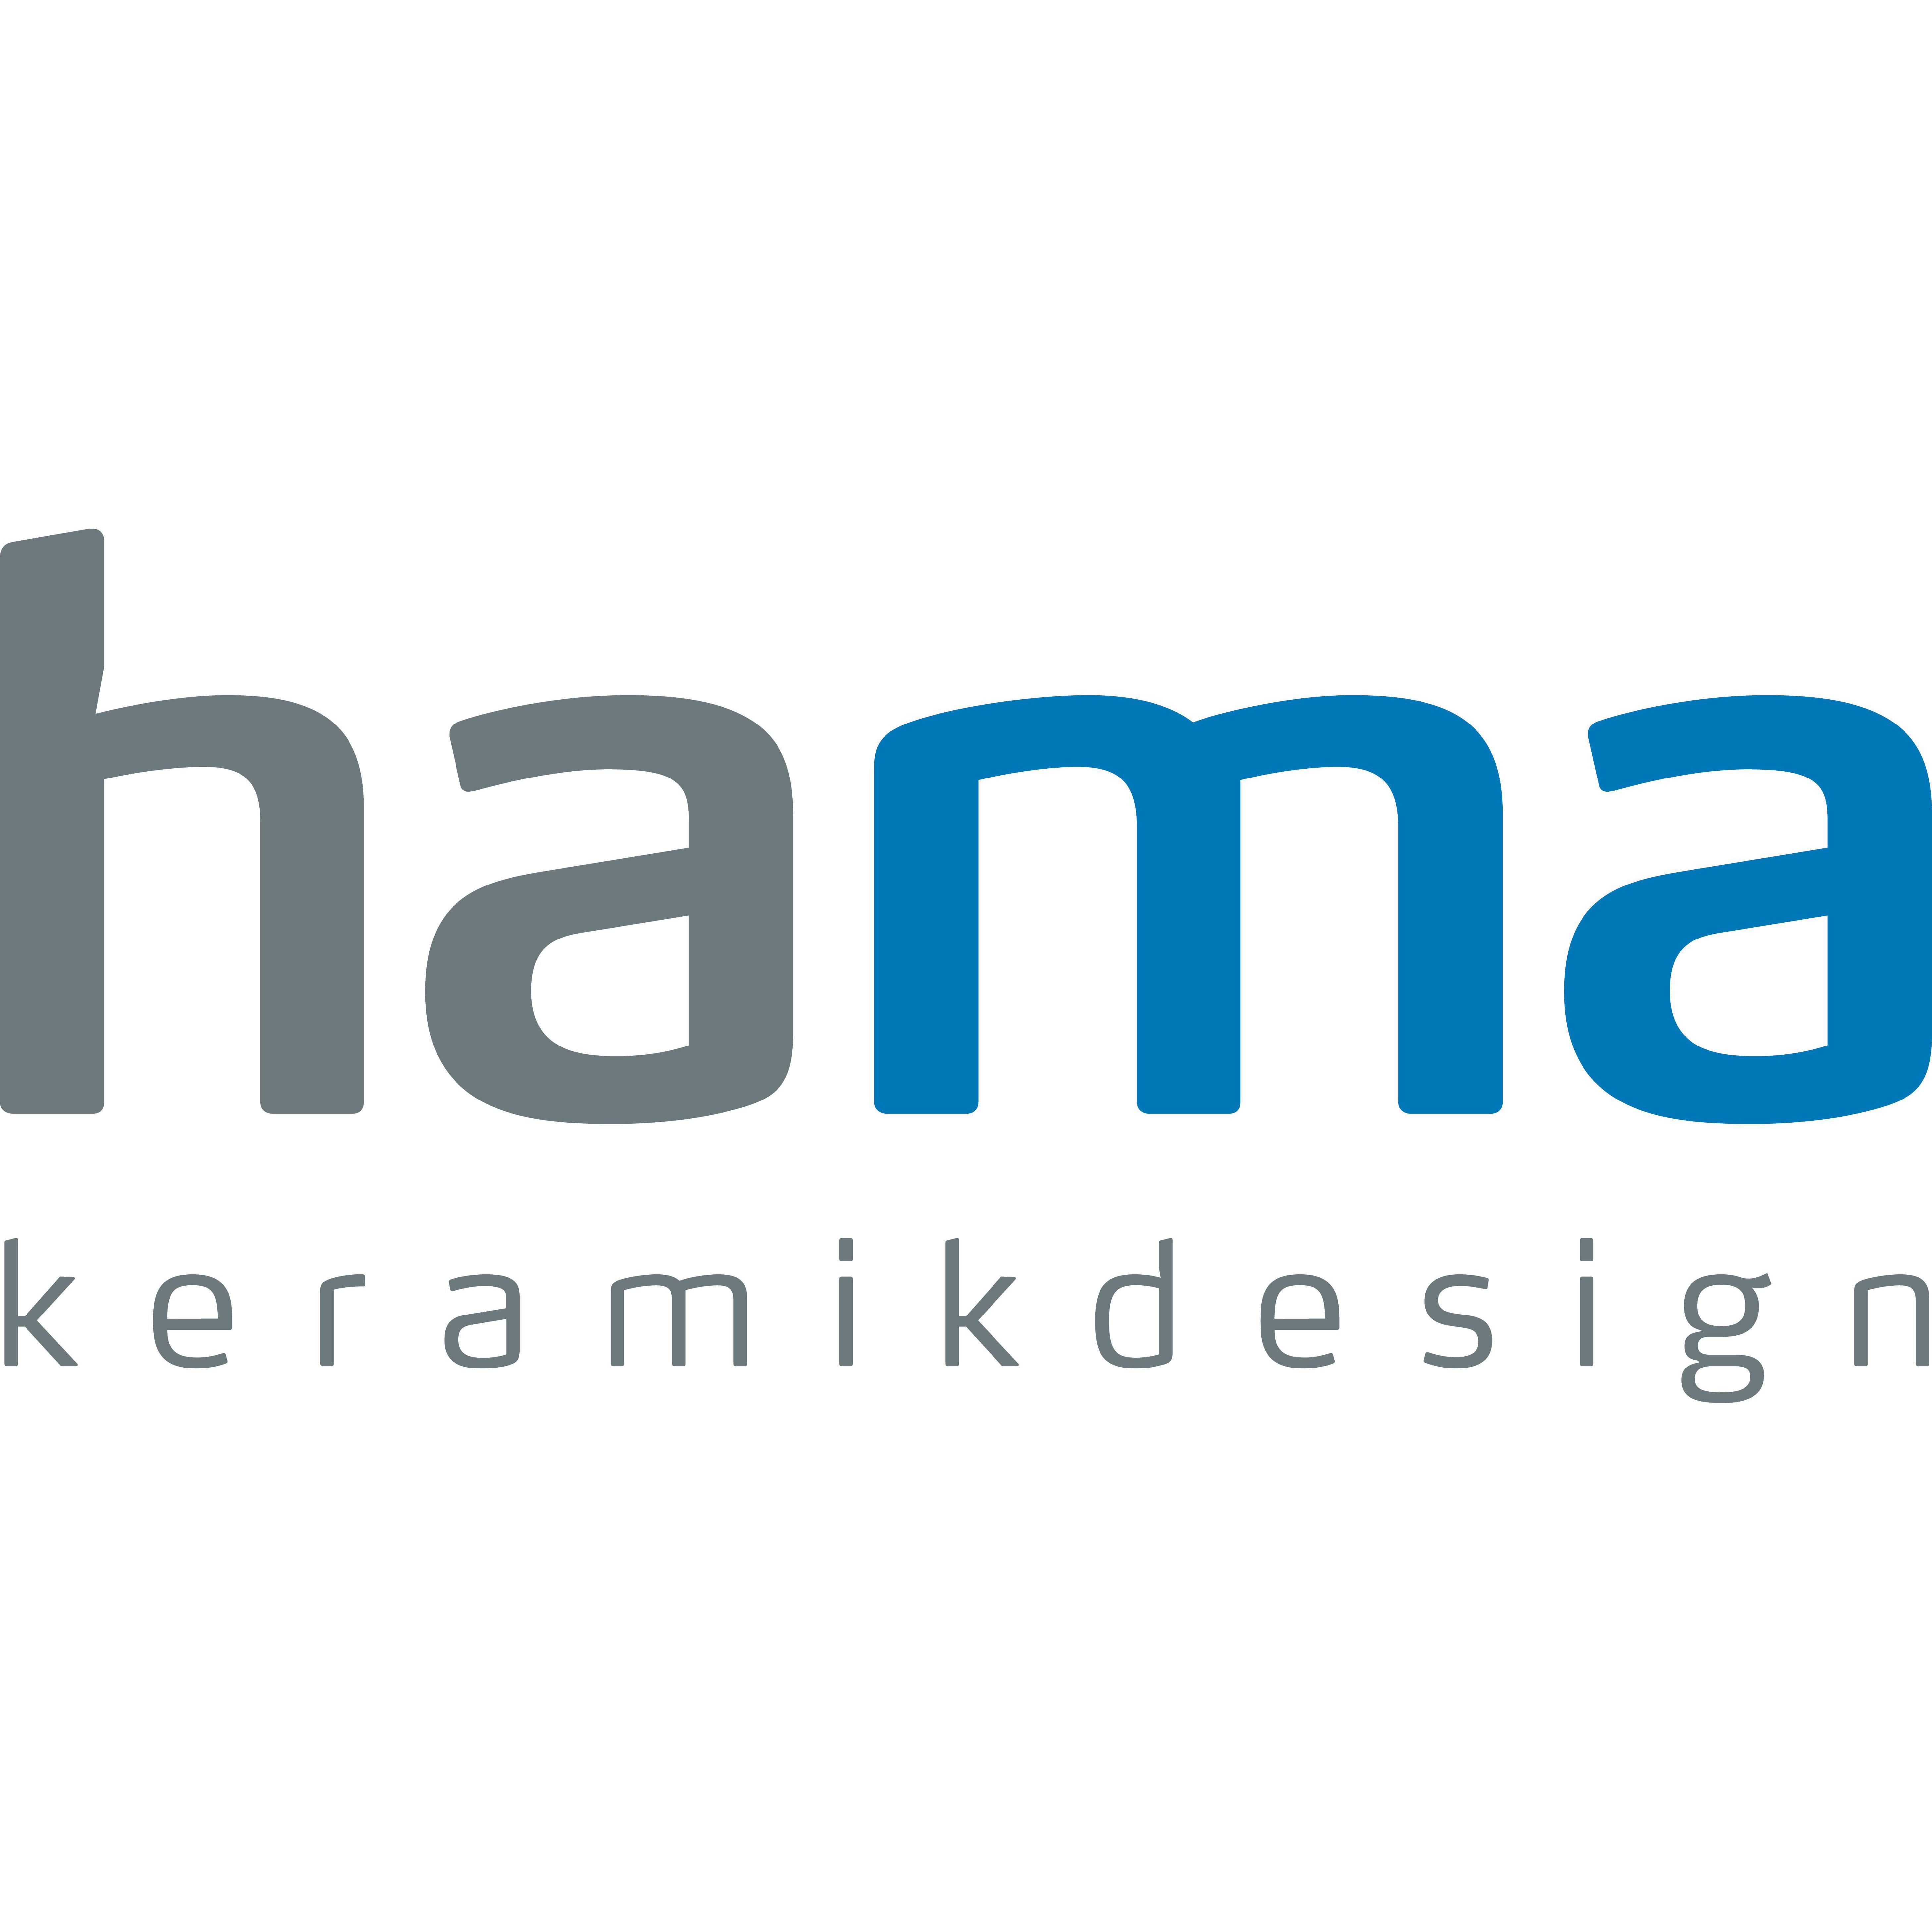 Hama Keramikdesign GmbH Logo